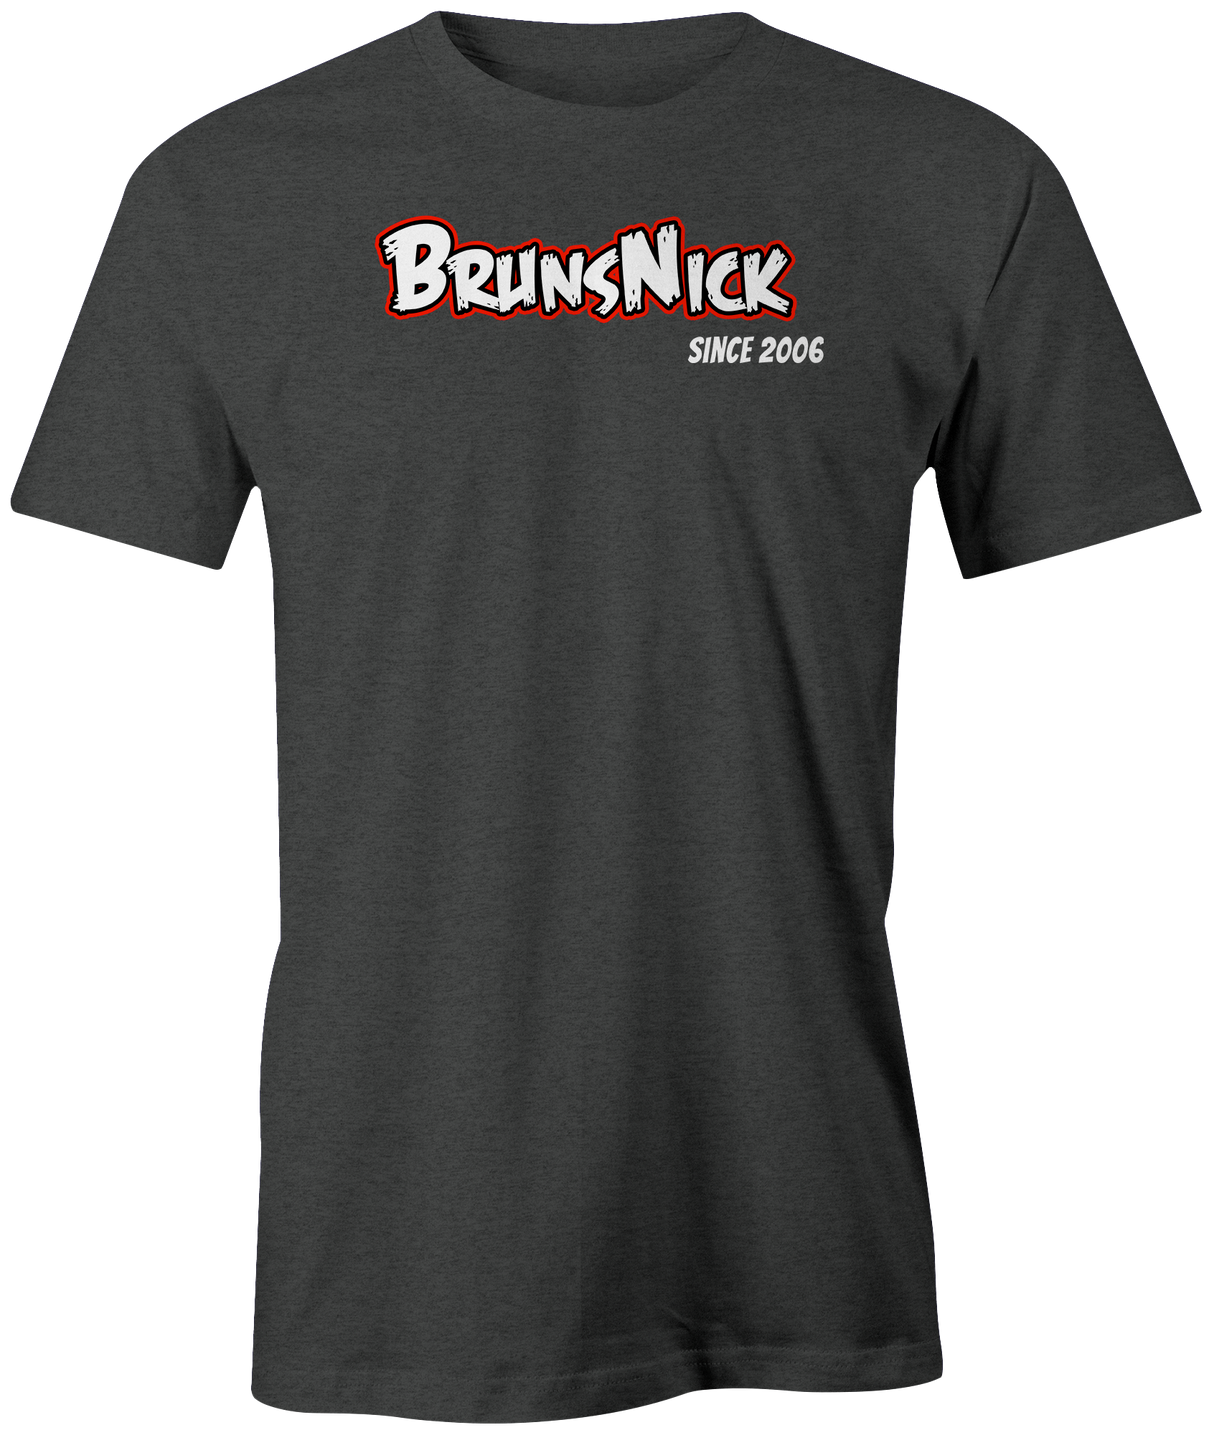 brunsnick-since-2006 bowling tee shirt BrunsNick brands of brunswick bowler tshirt